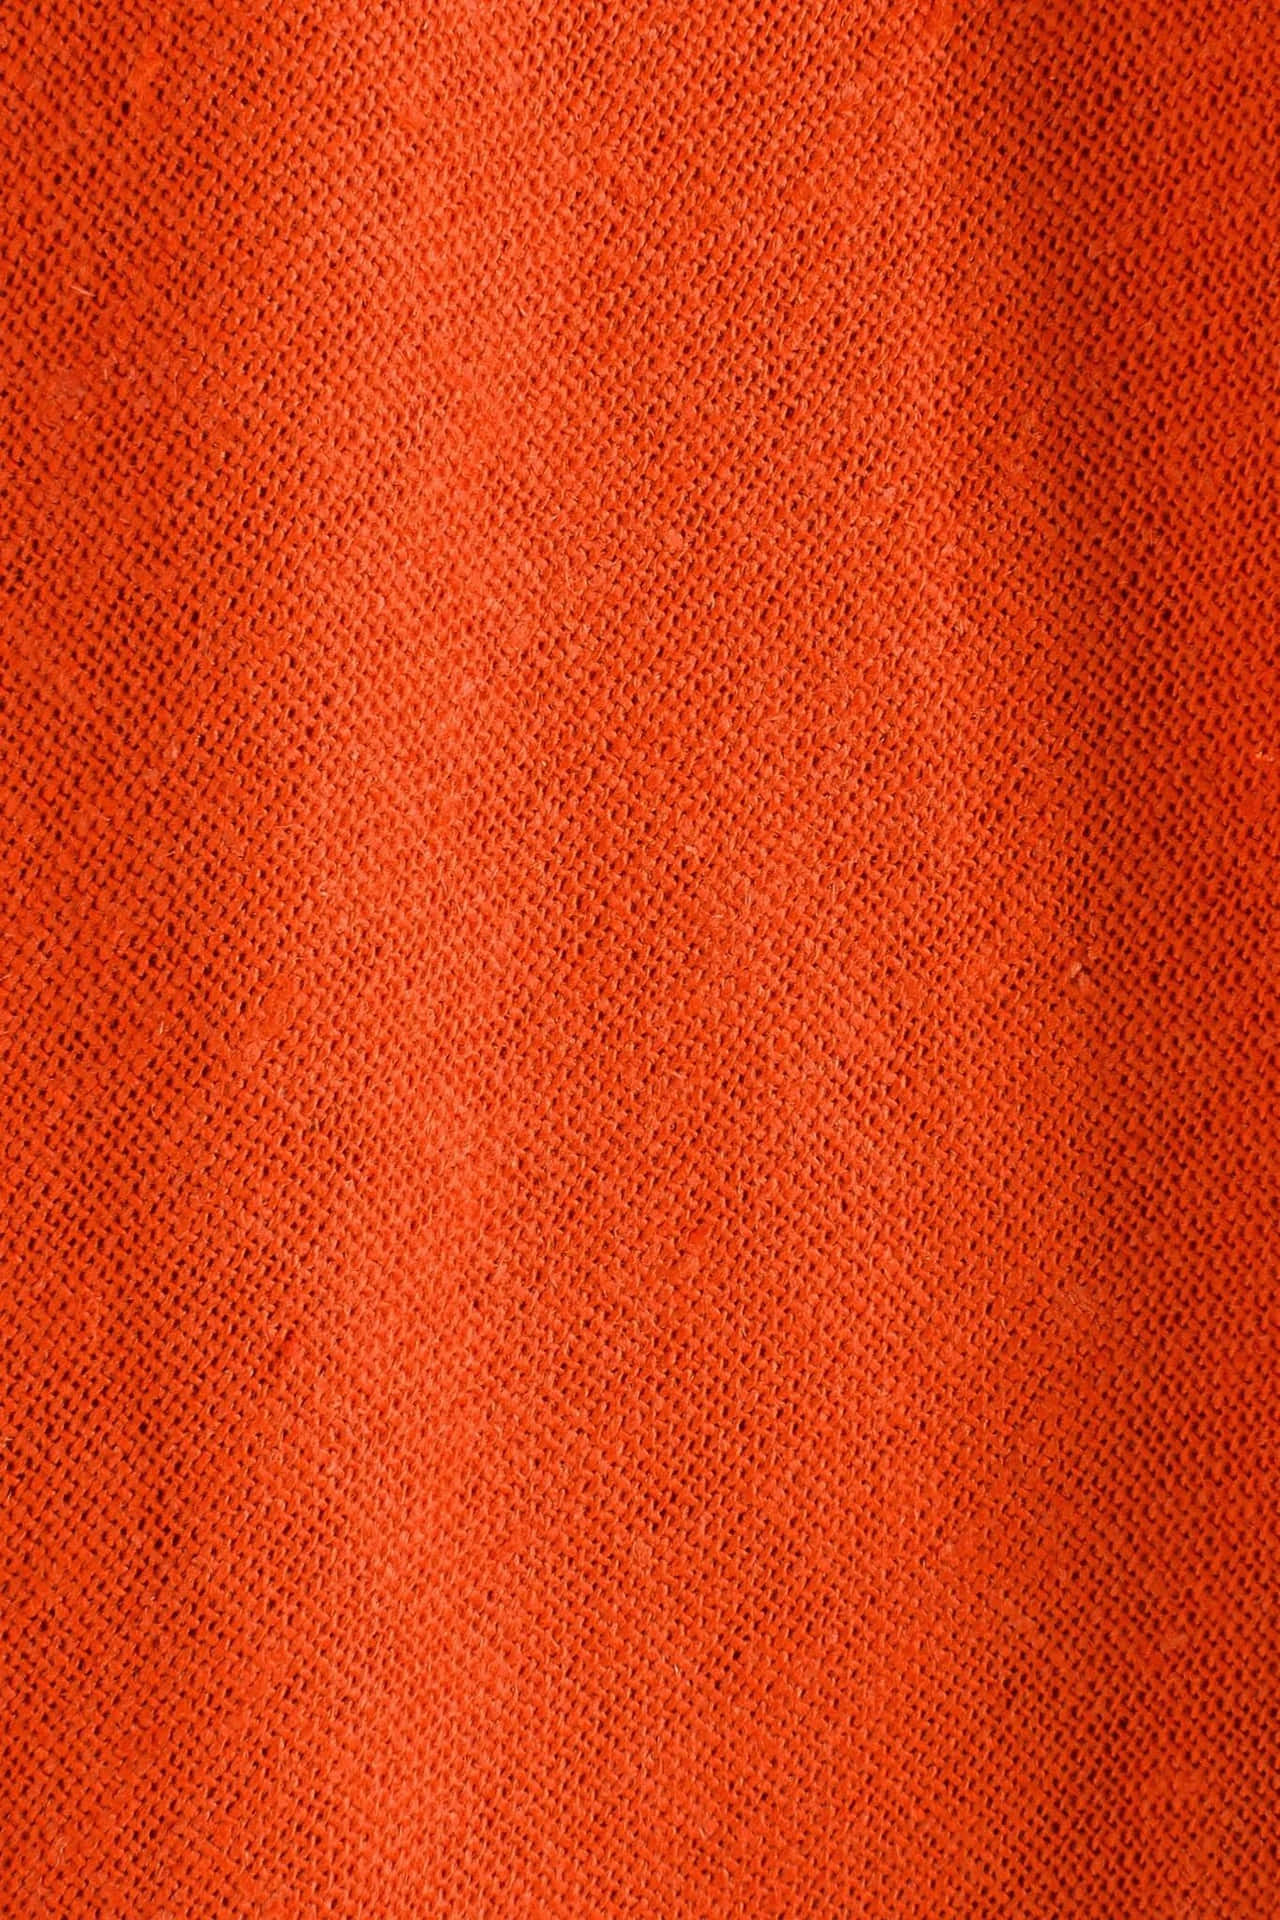 Burnt Orange Background Cloth Shades